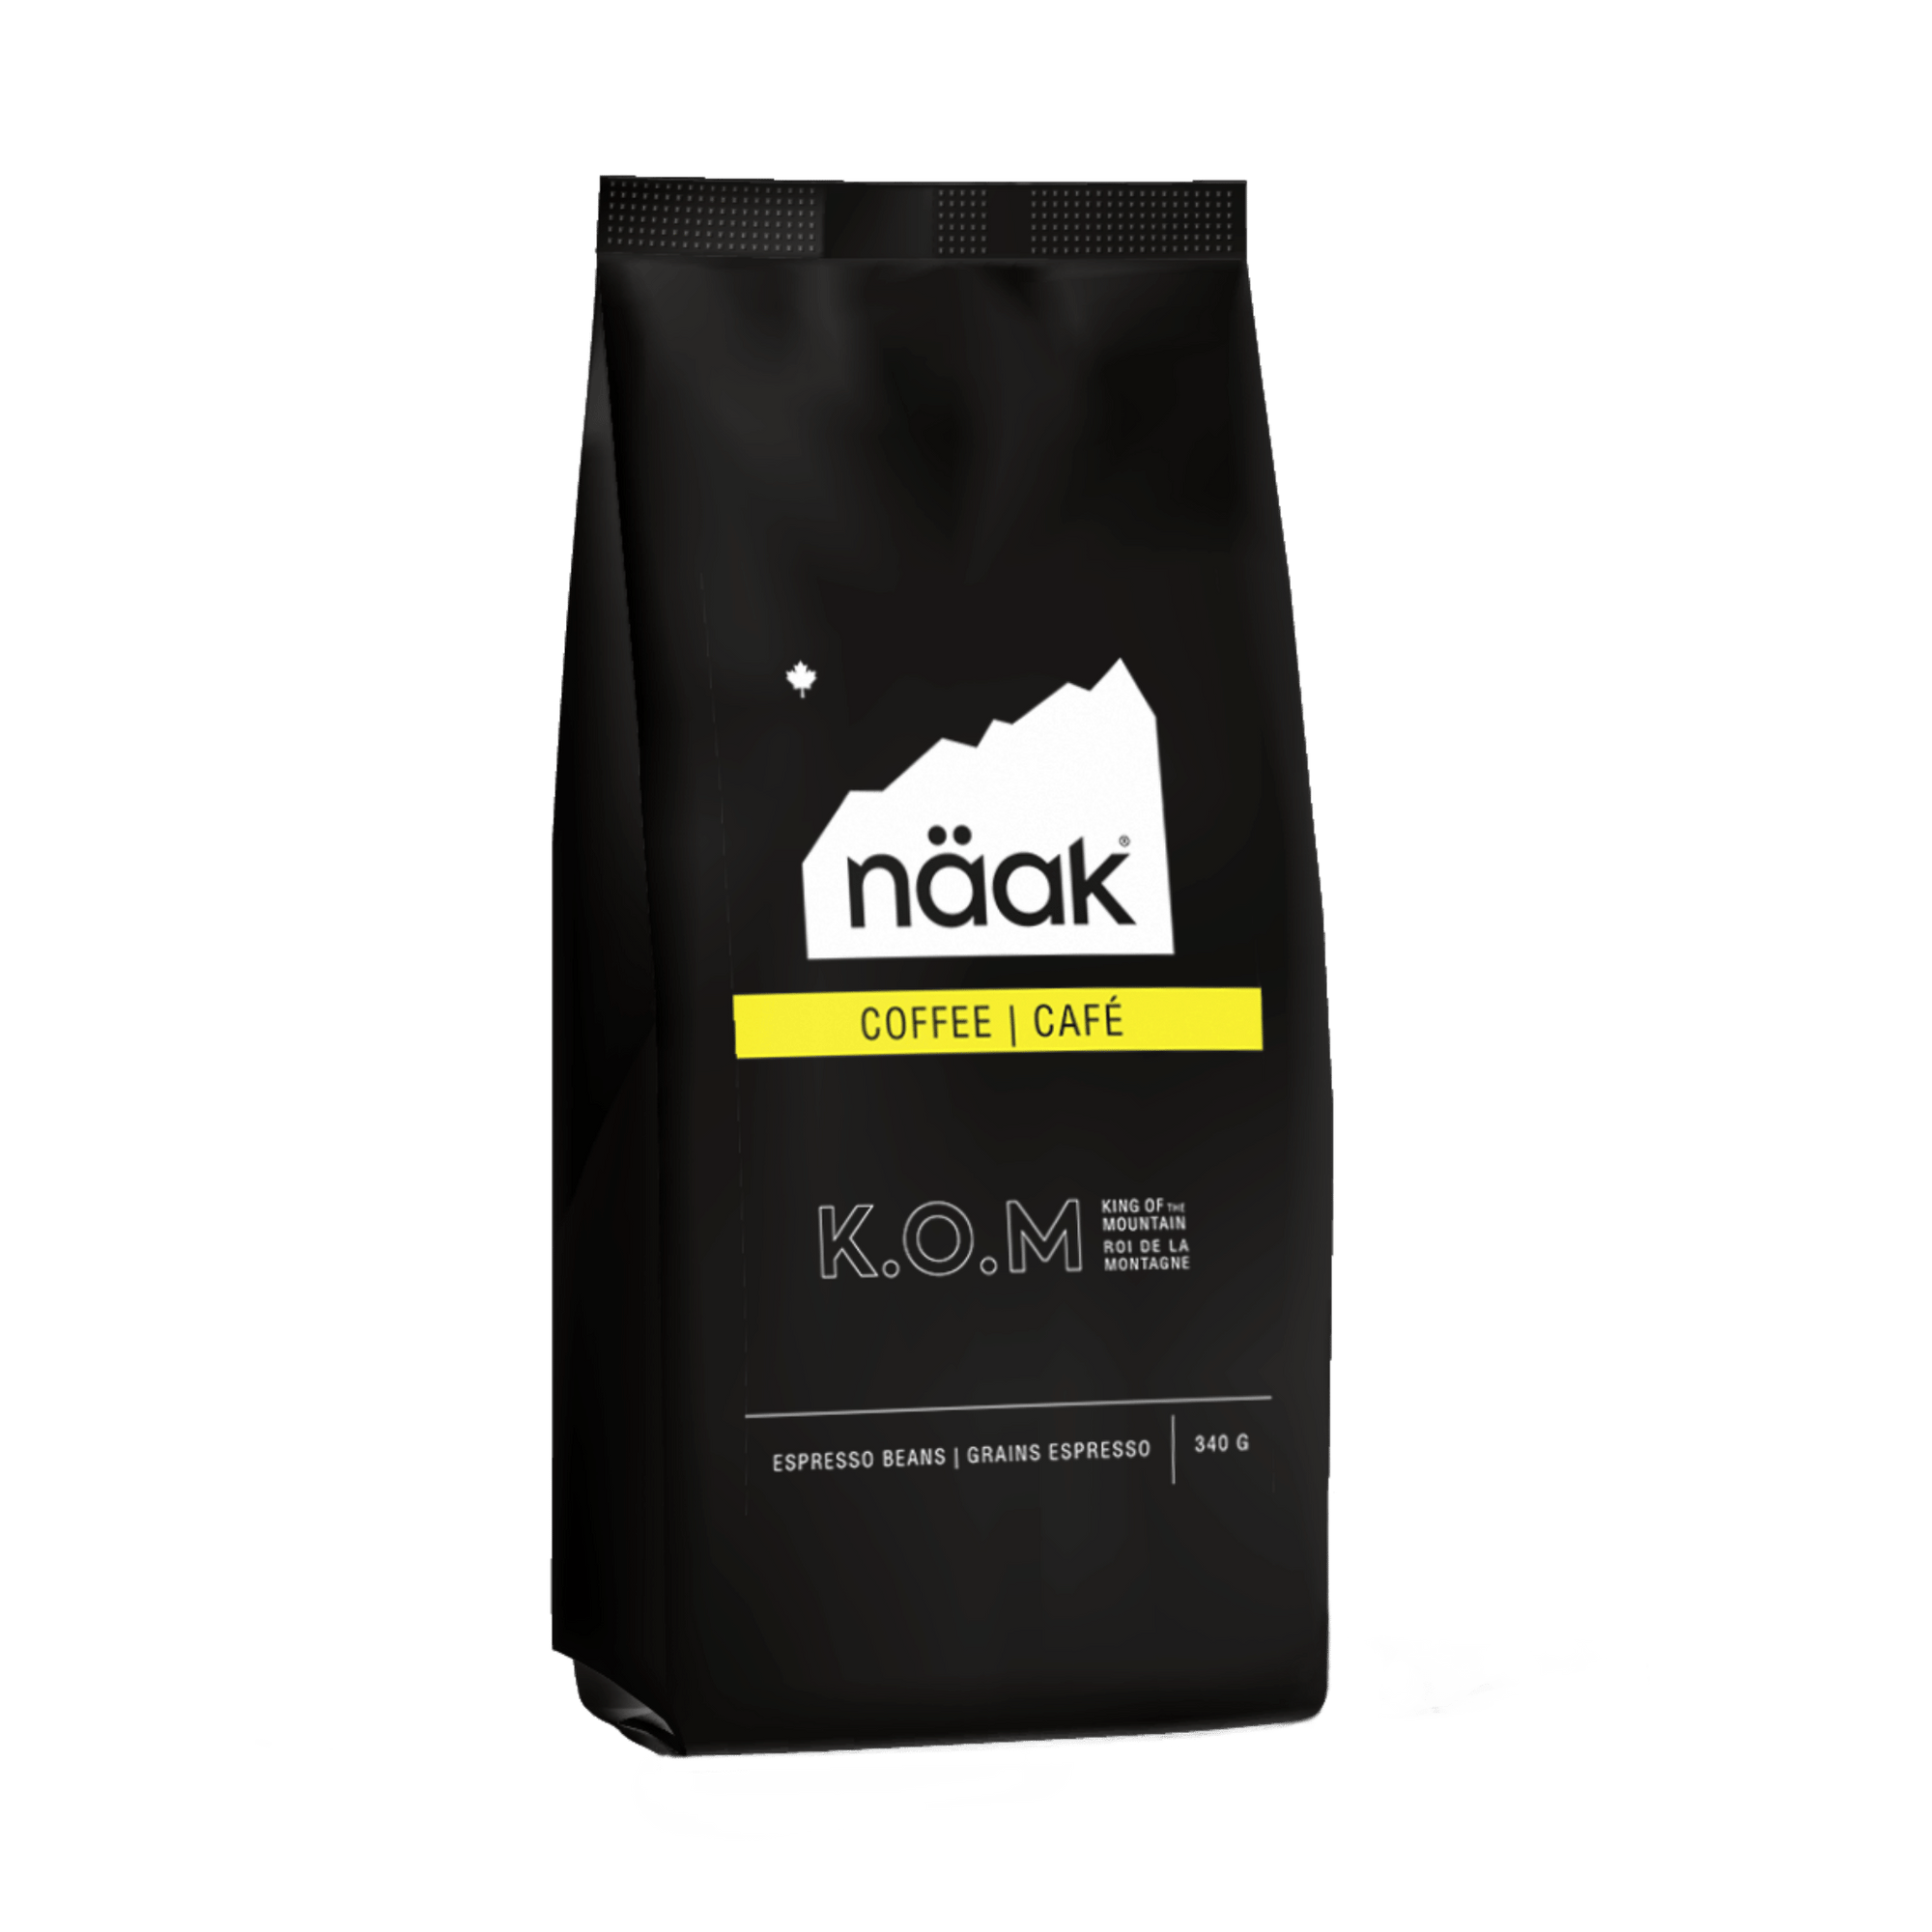 Näak Coffee K.O.M Coffee | Ethiopian Blend